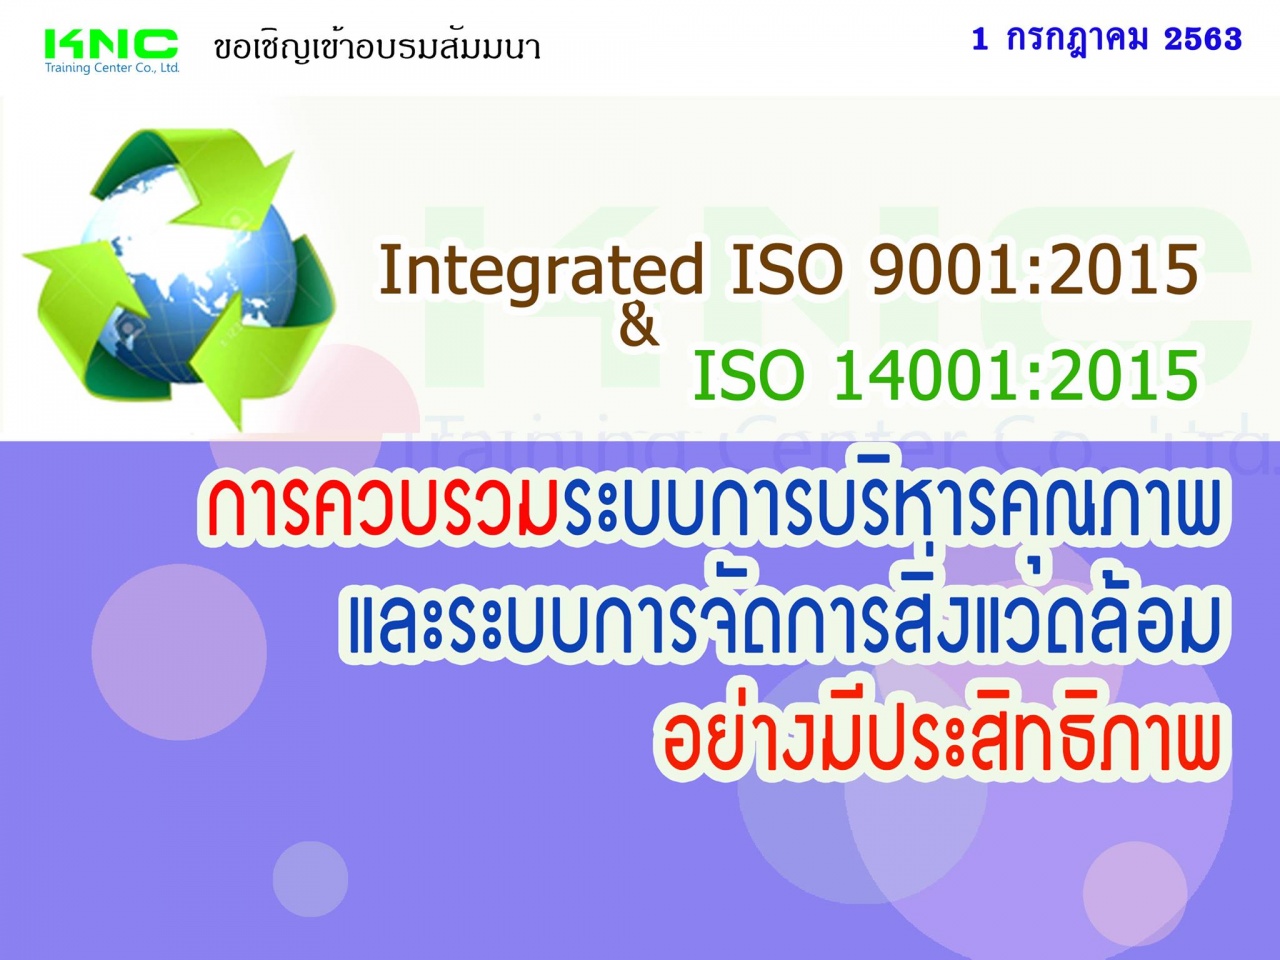 Integrated ISO 9001:2015 & ISO 14001:2015  การควบรวมระบบการบริหารคุณภาพและระบบการจัดการสิ่งแวดล้อมอย่างมีประสิทธิภาพ